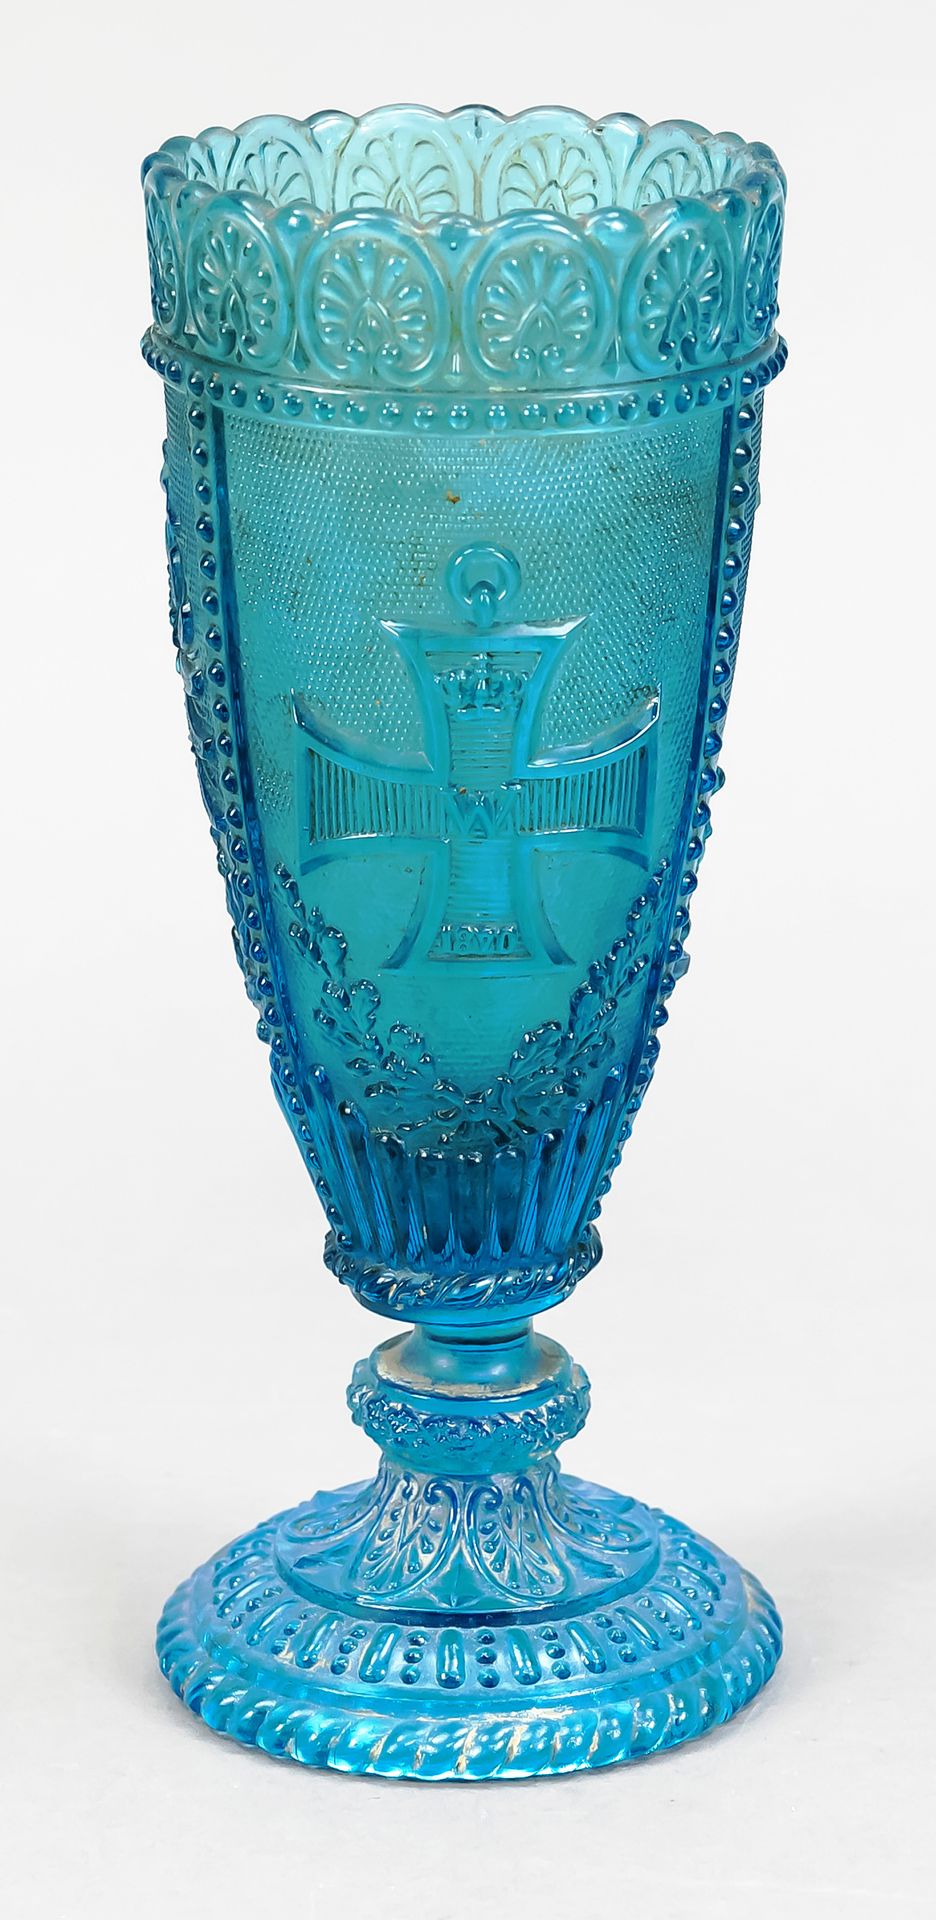 Null 祖国脚杯，约1900年，圆形支架，短柄，锥形圆顶，蓝色模制玻璃，壁上有丰富的浮雕装饰，高18.5厘米